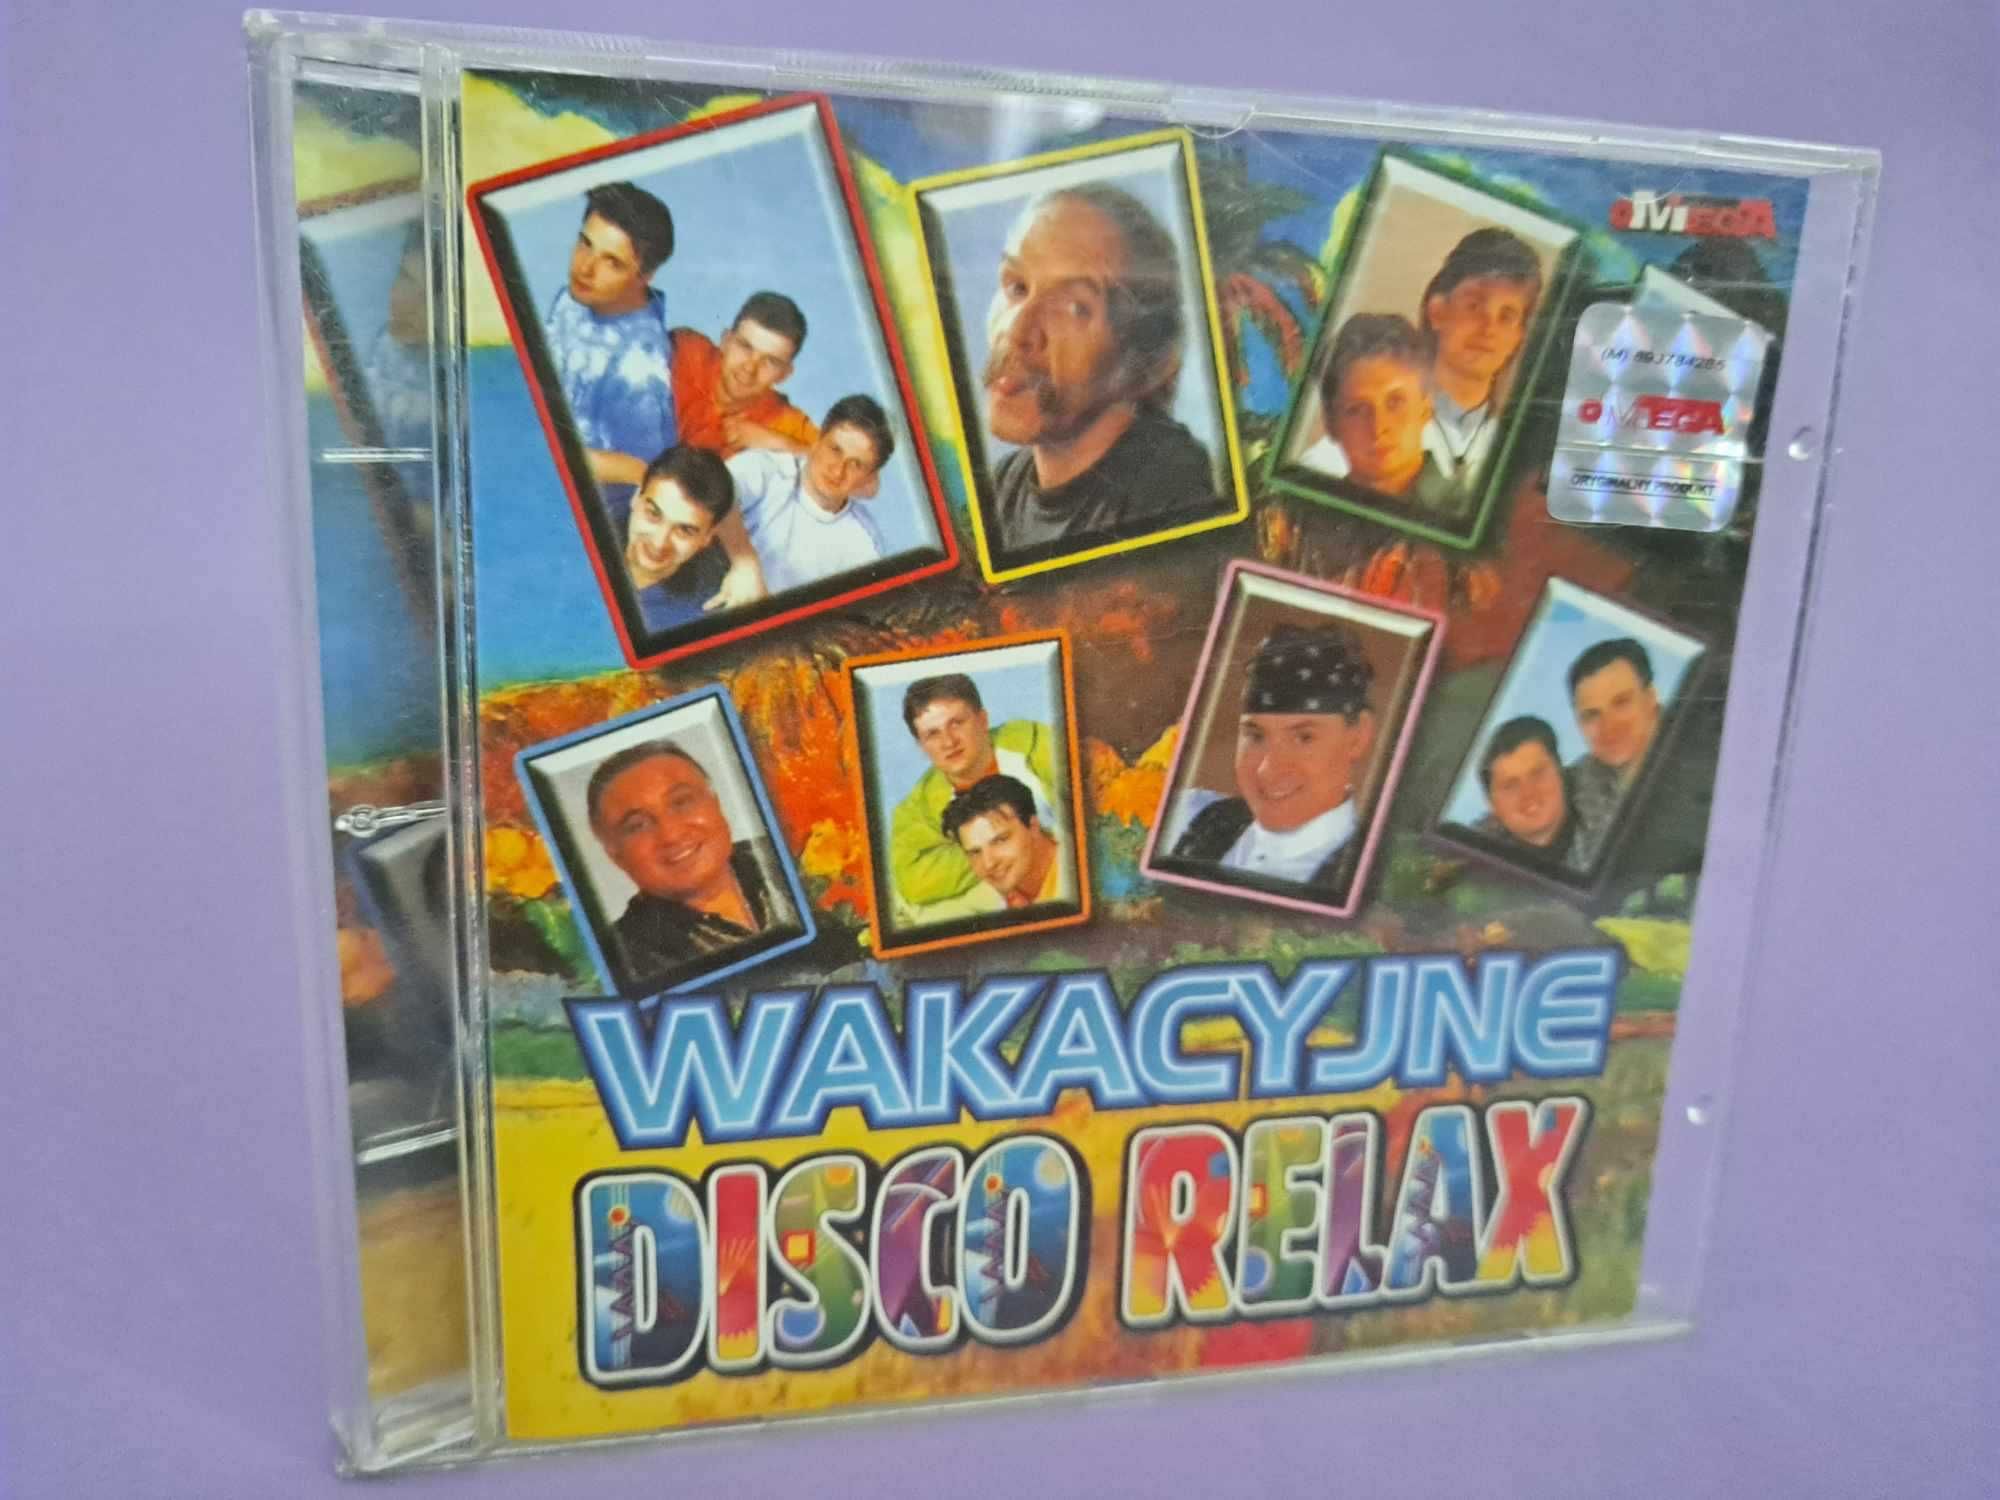 DISCO POLO - Wakacyjne Disco Relax OMEGA CD Boys Akcent Skaner inni